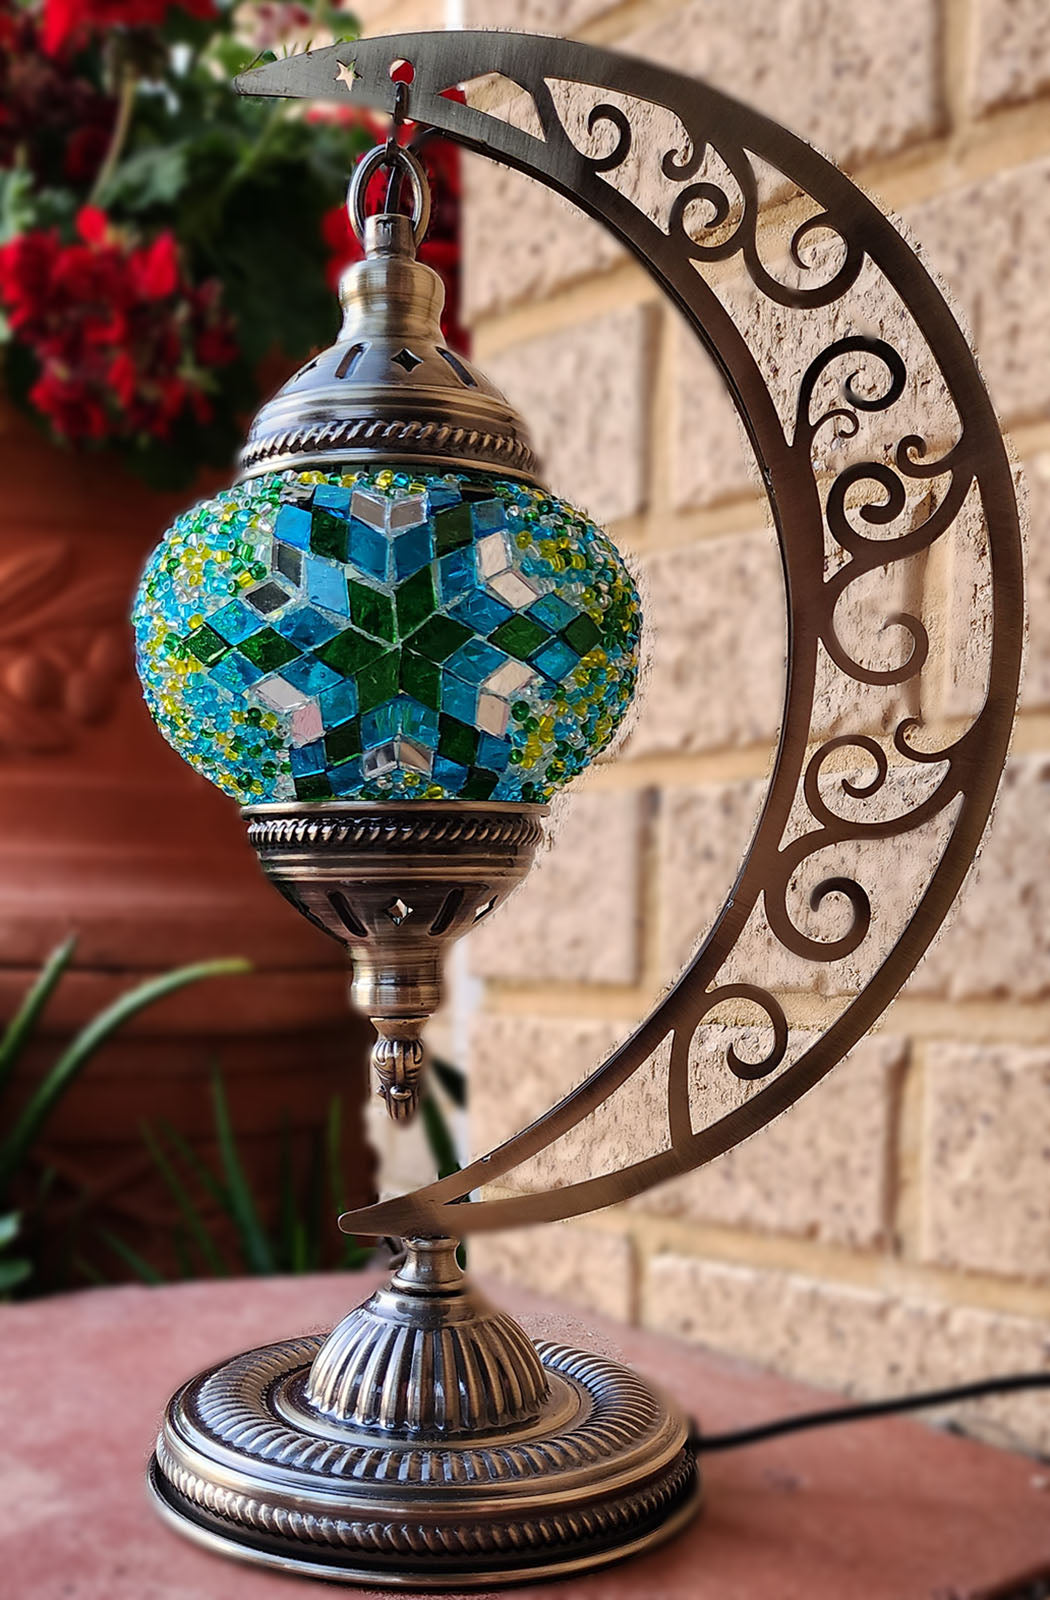 Mosaic Lamp DIY Craft Kit Bahce Green and Blue